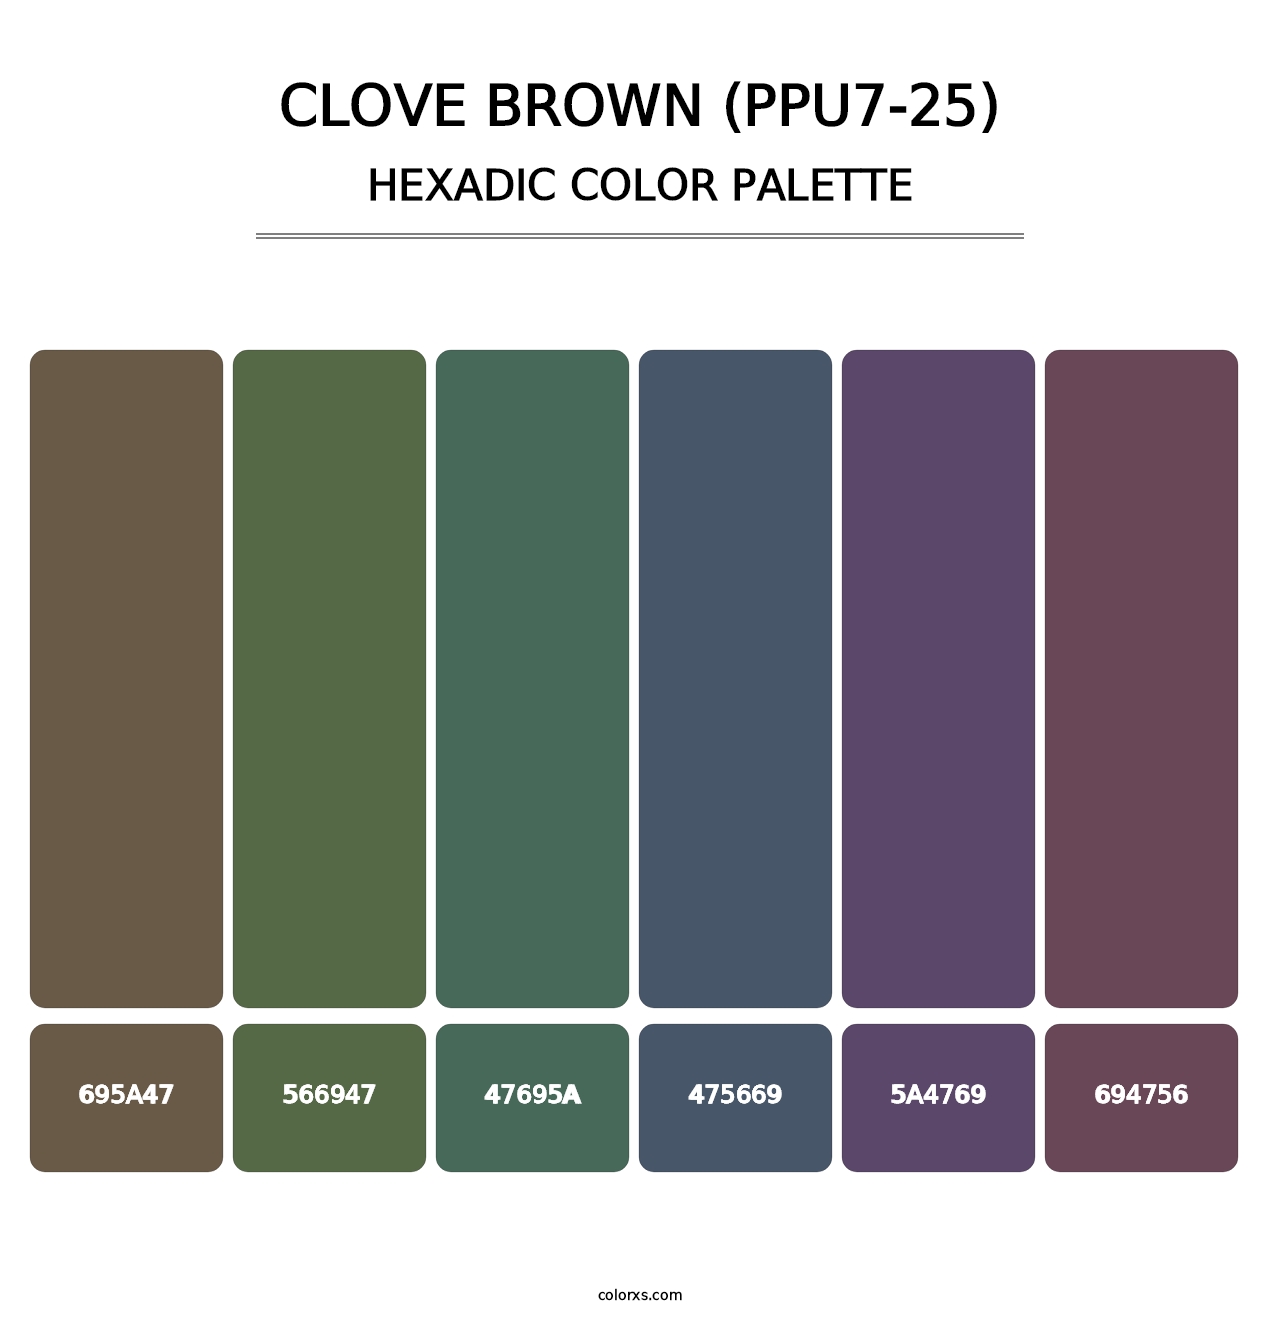 Clove Brown (PPU7-25) - Hexadic Color Palette